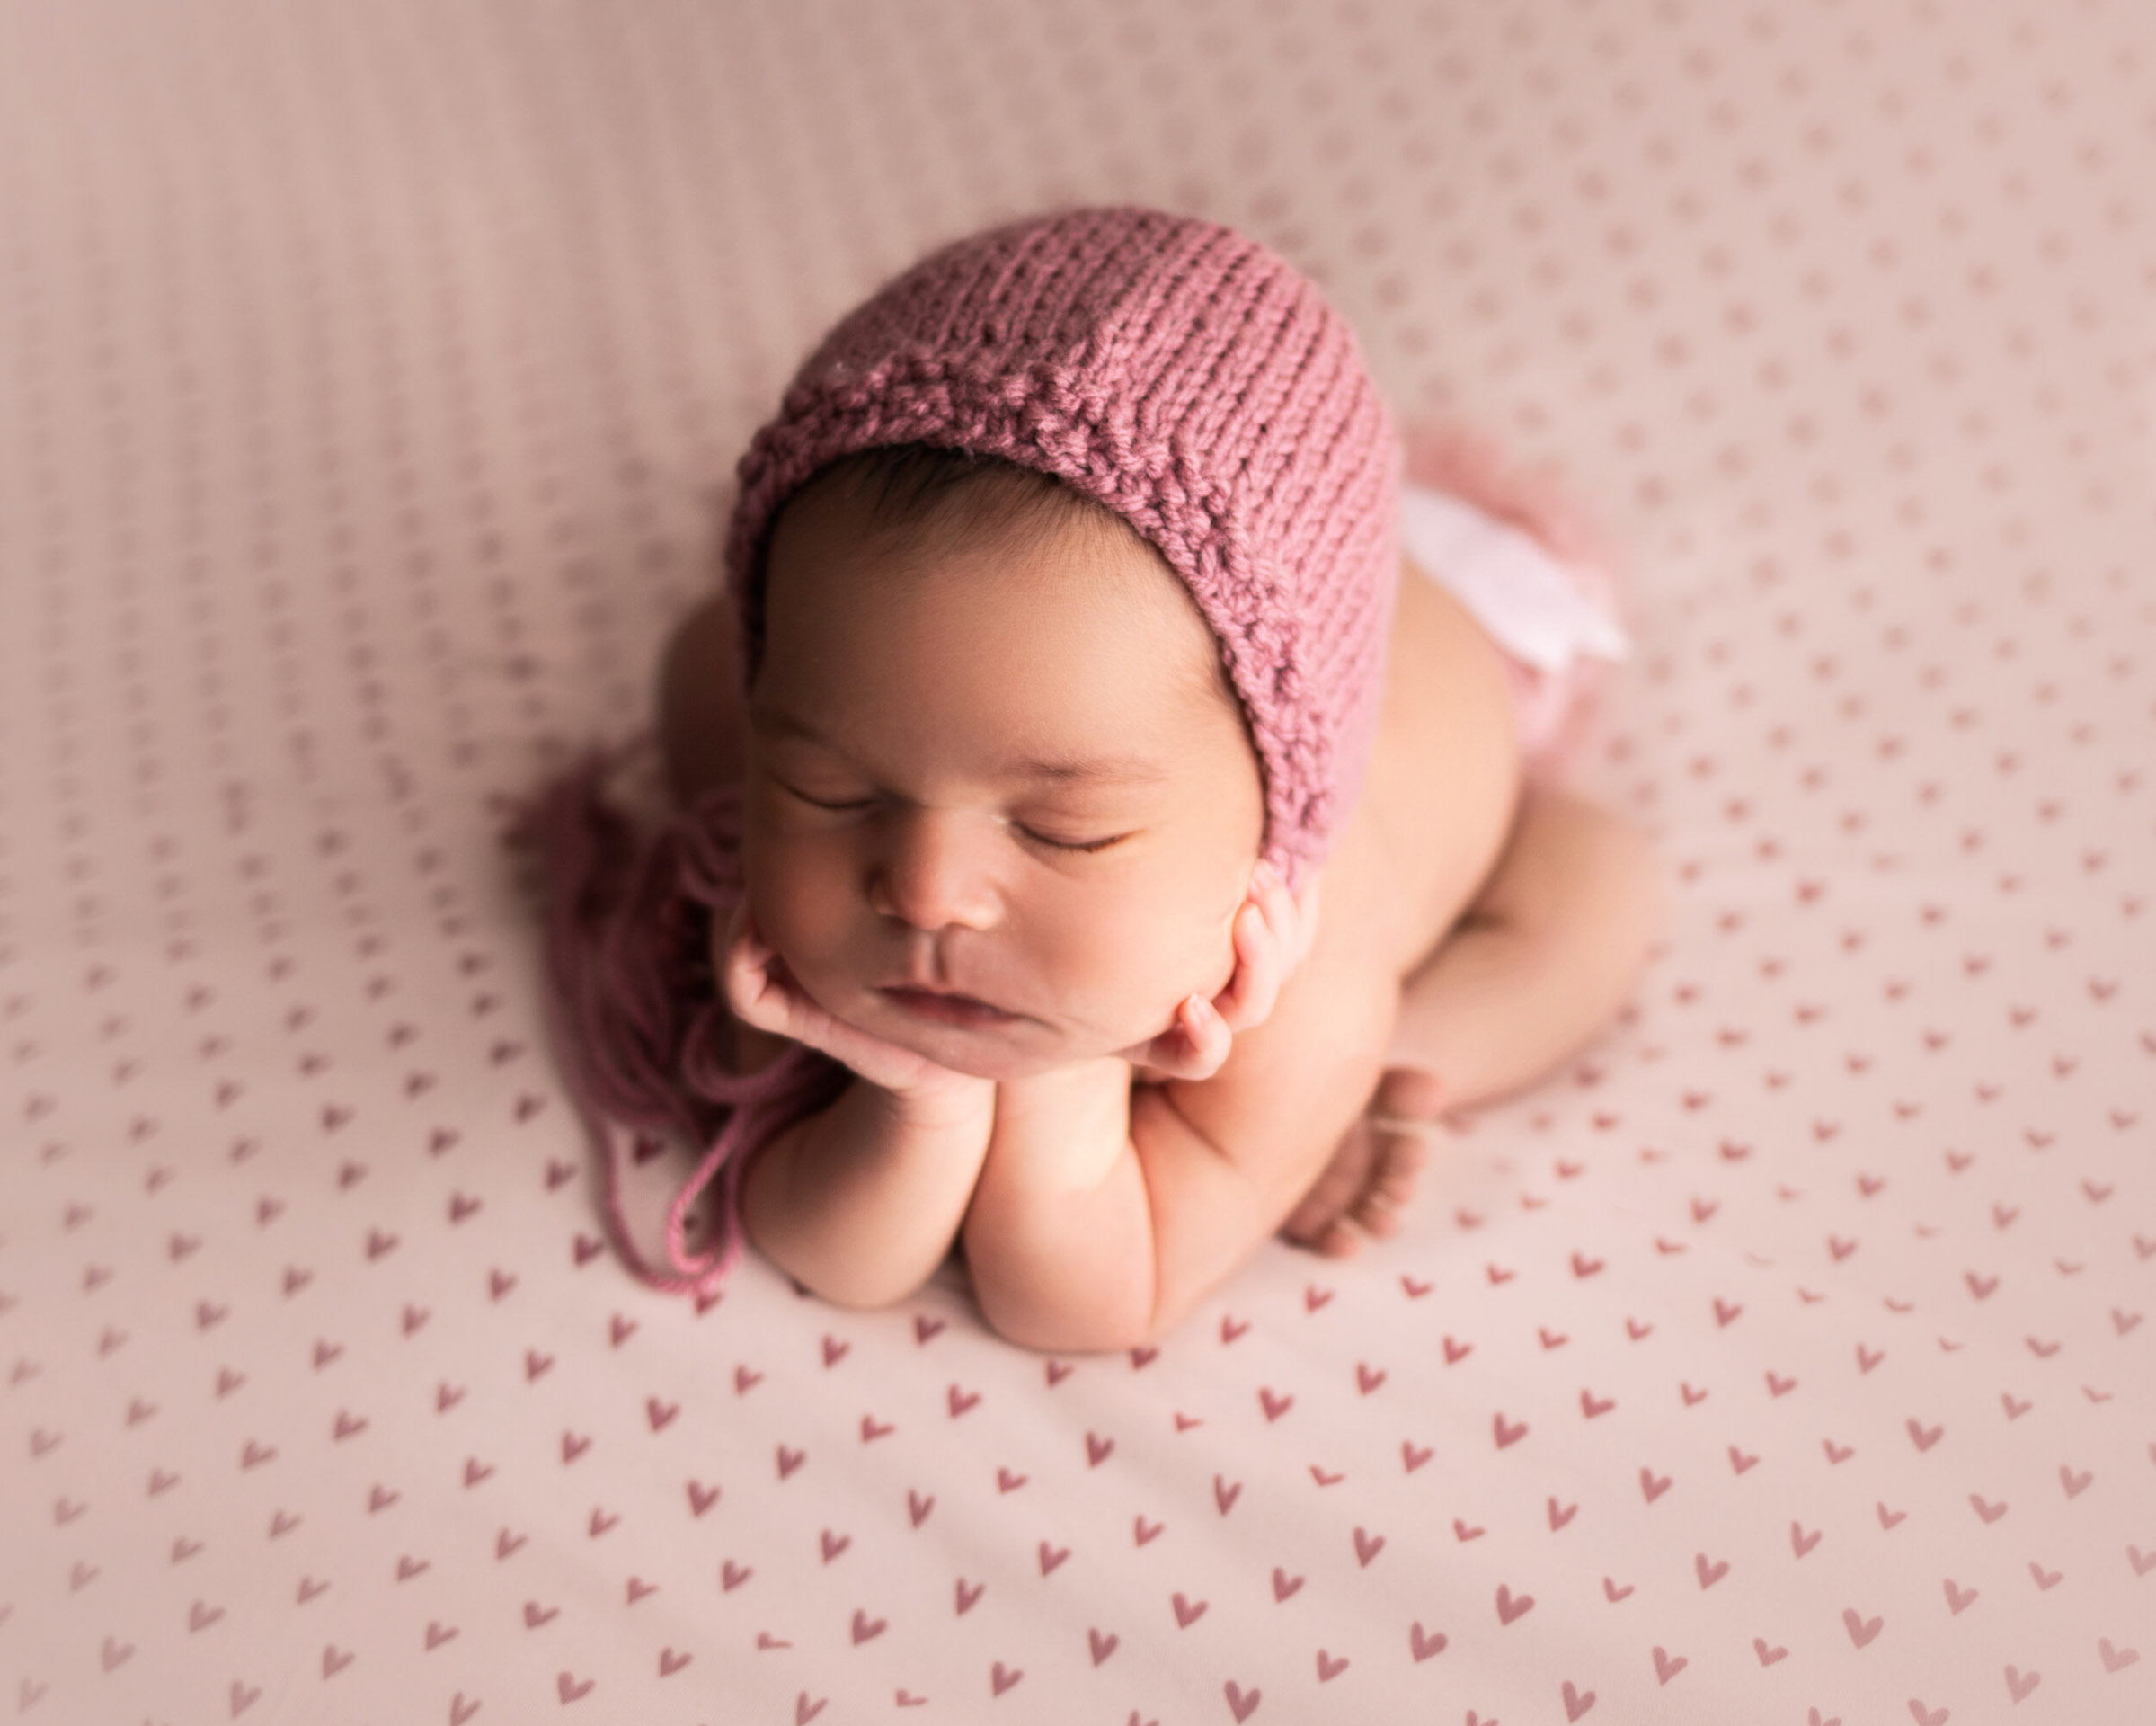 Newborn Photographer in Minneapolis, MN | Newborn Composites and Safety